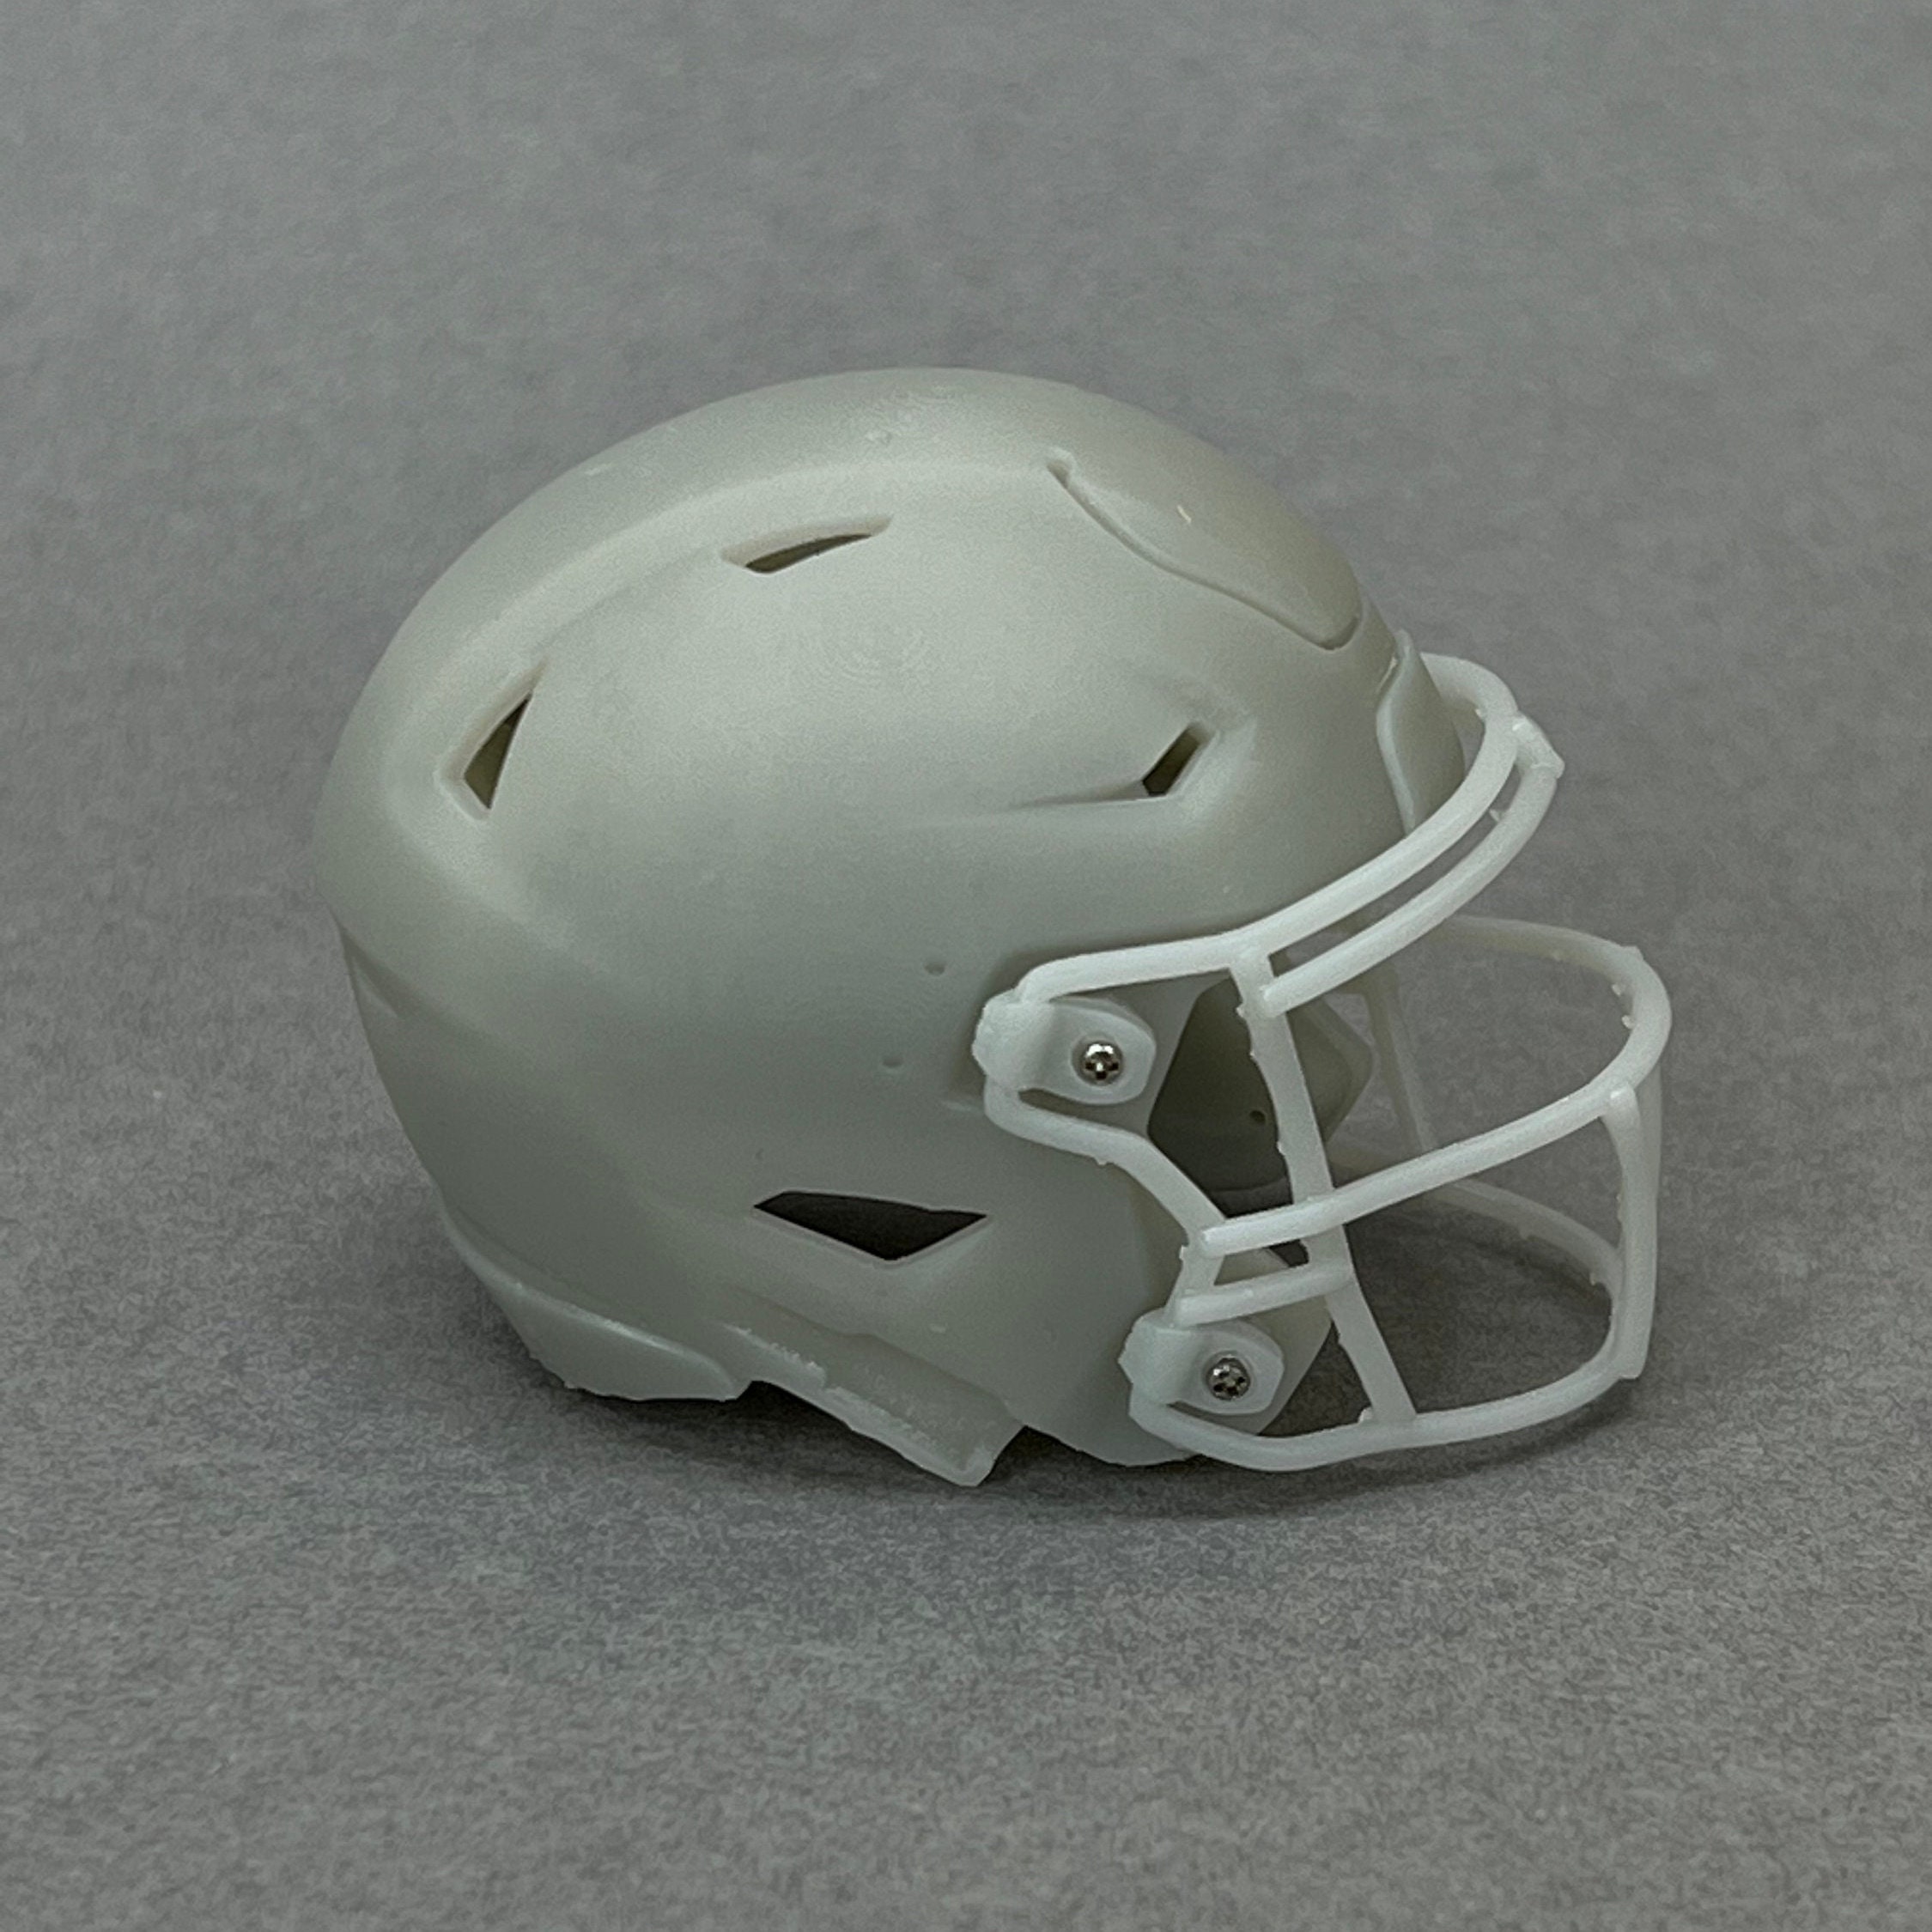 Football helmet riddell speedflex 3D - TurboSquid 1478770